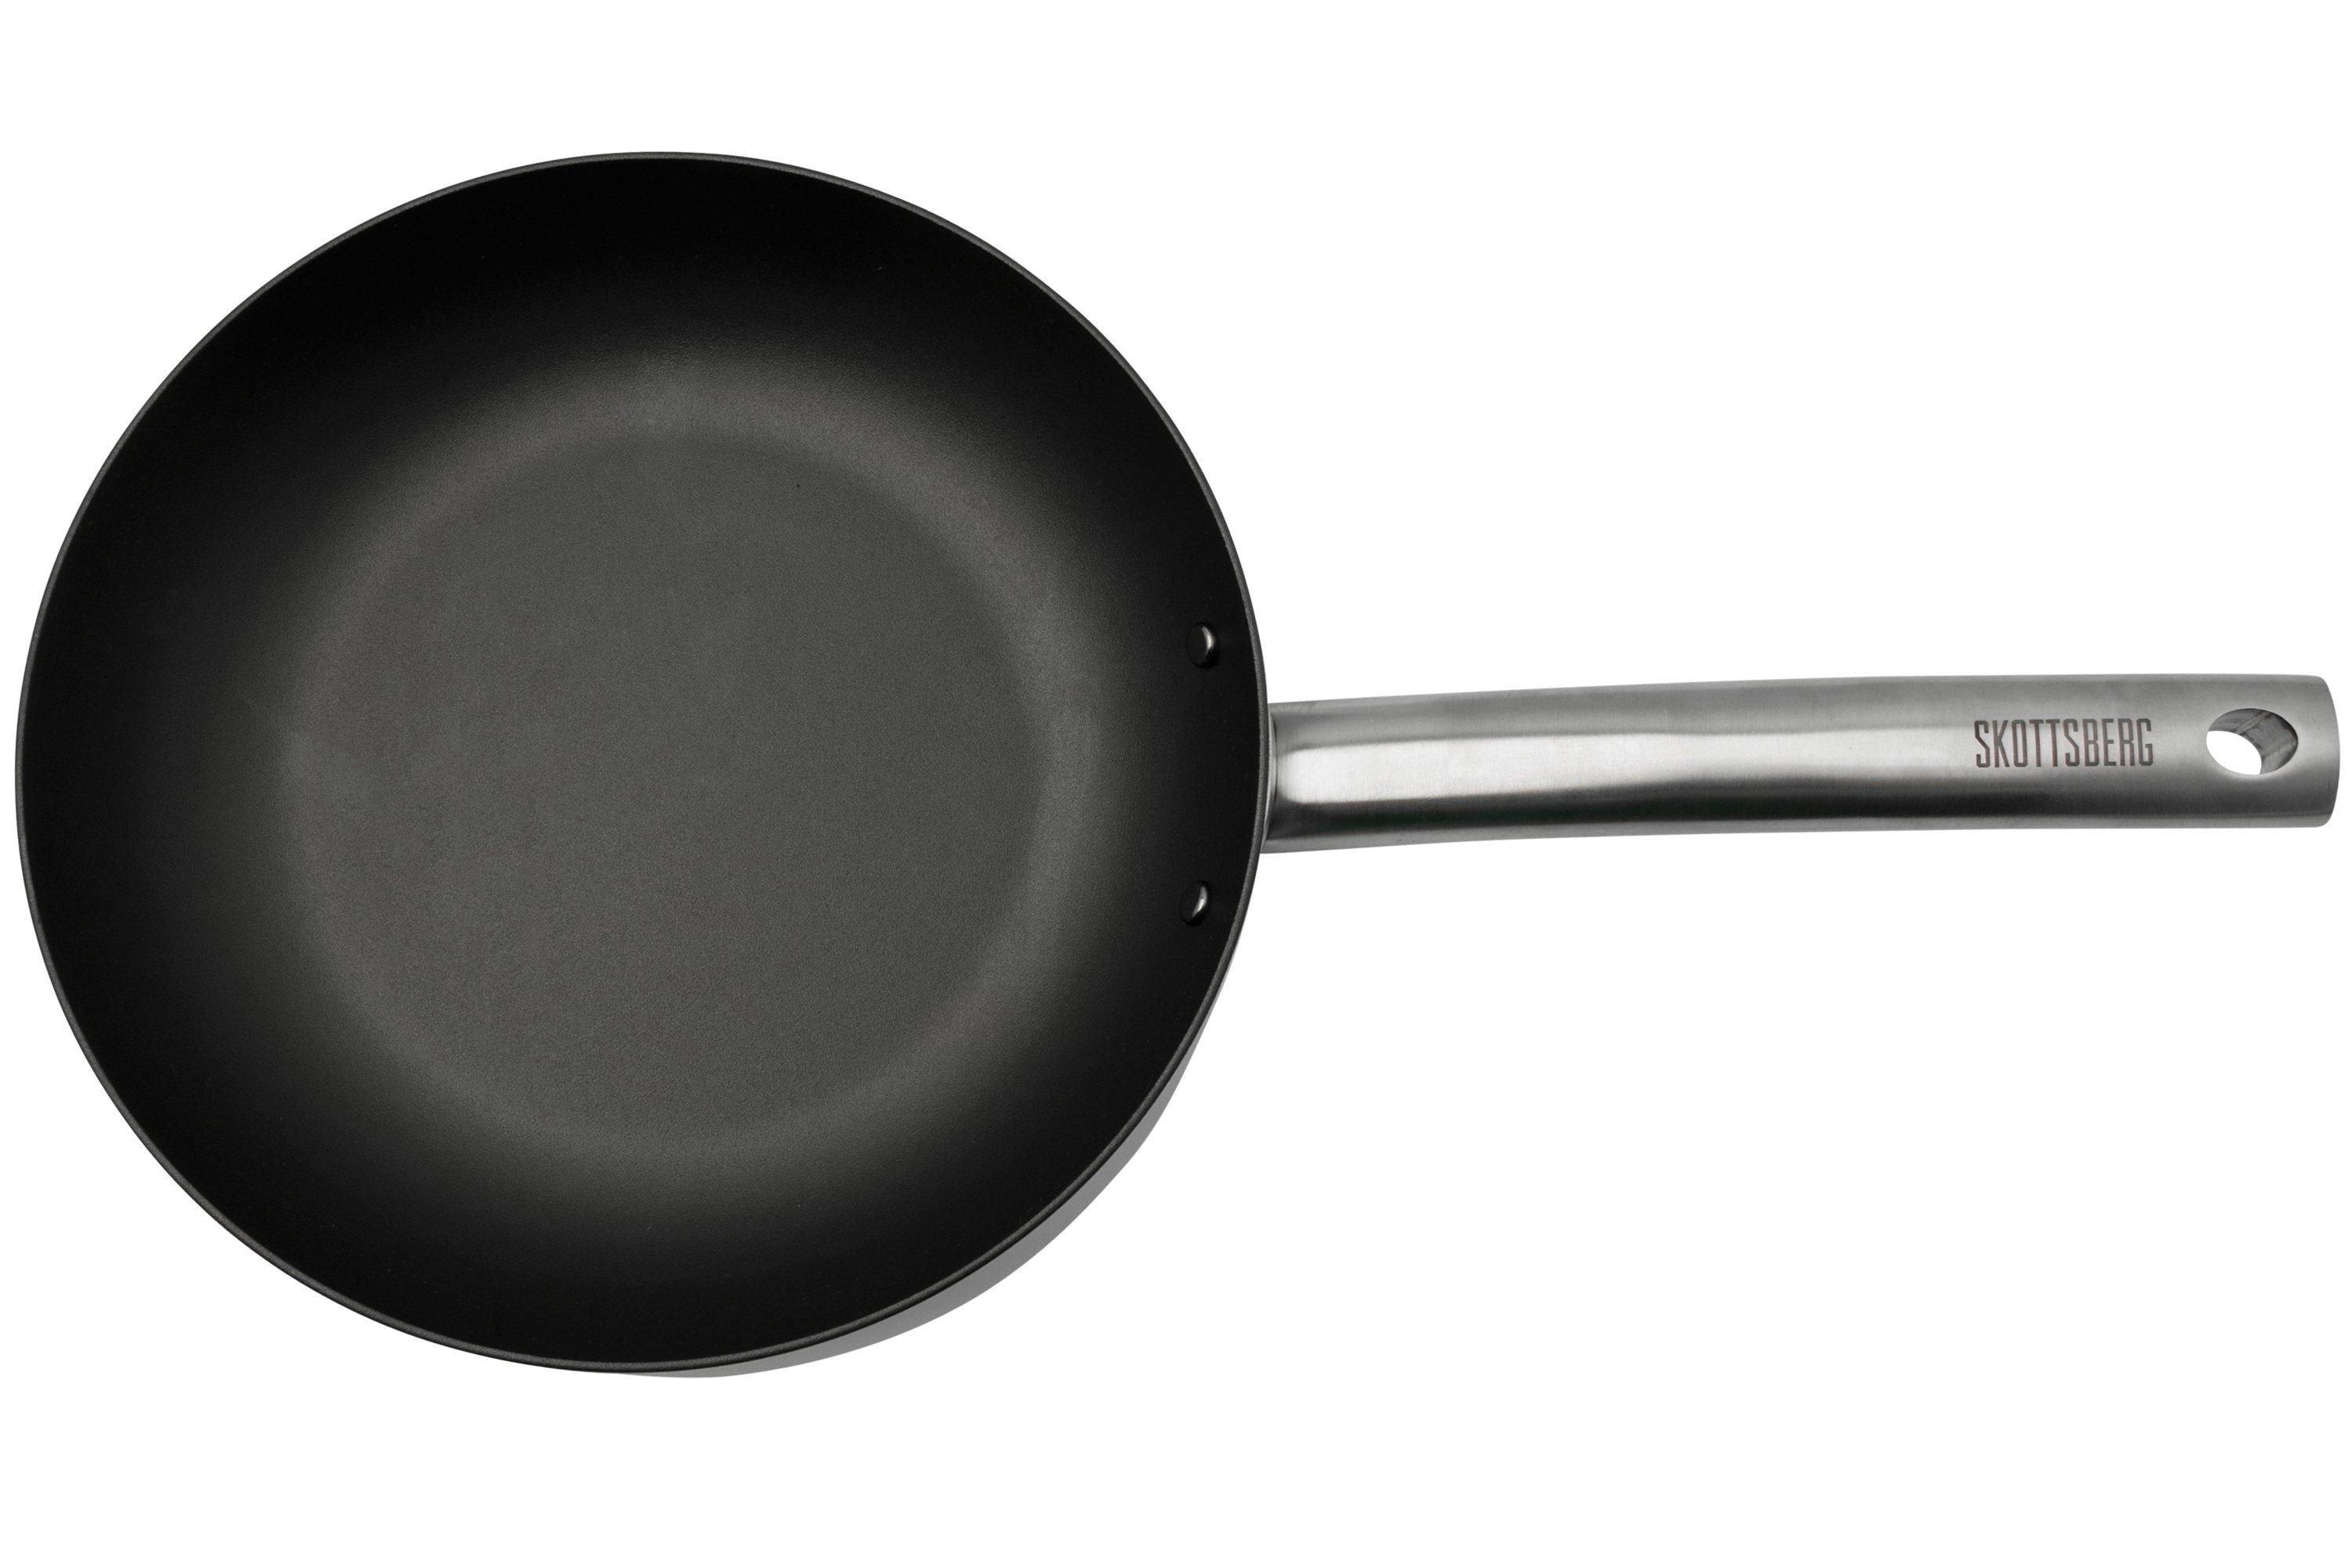 Nordik Frying Pan